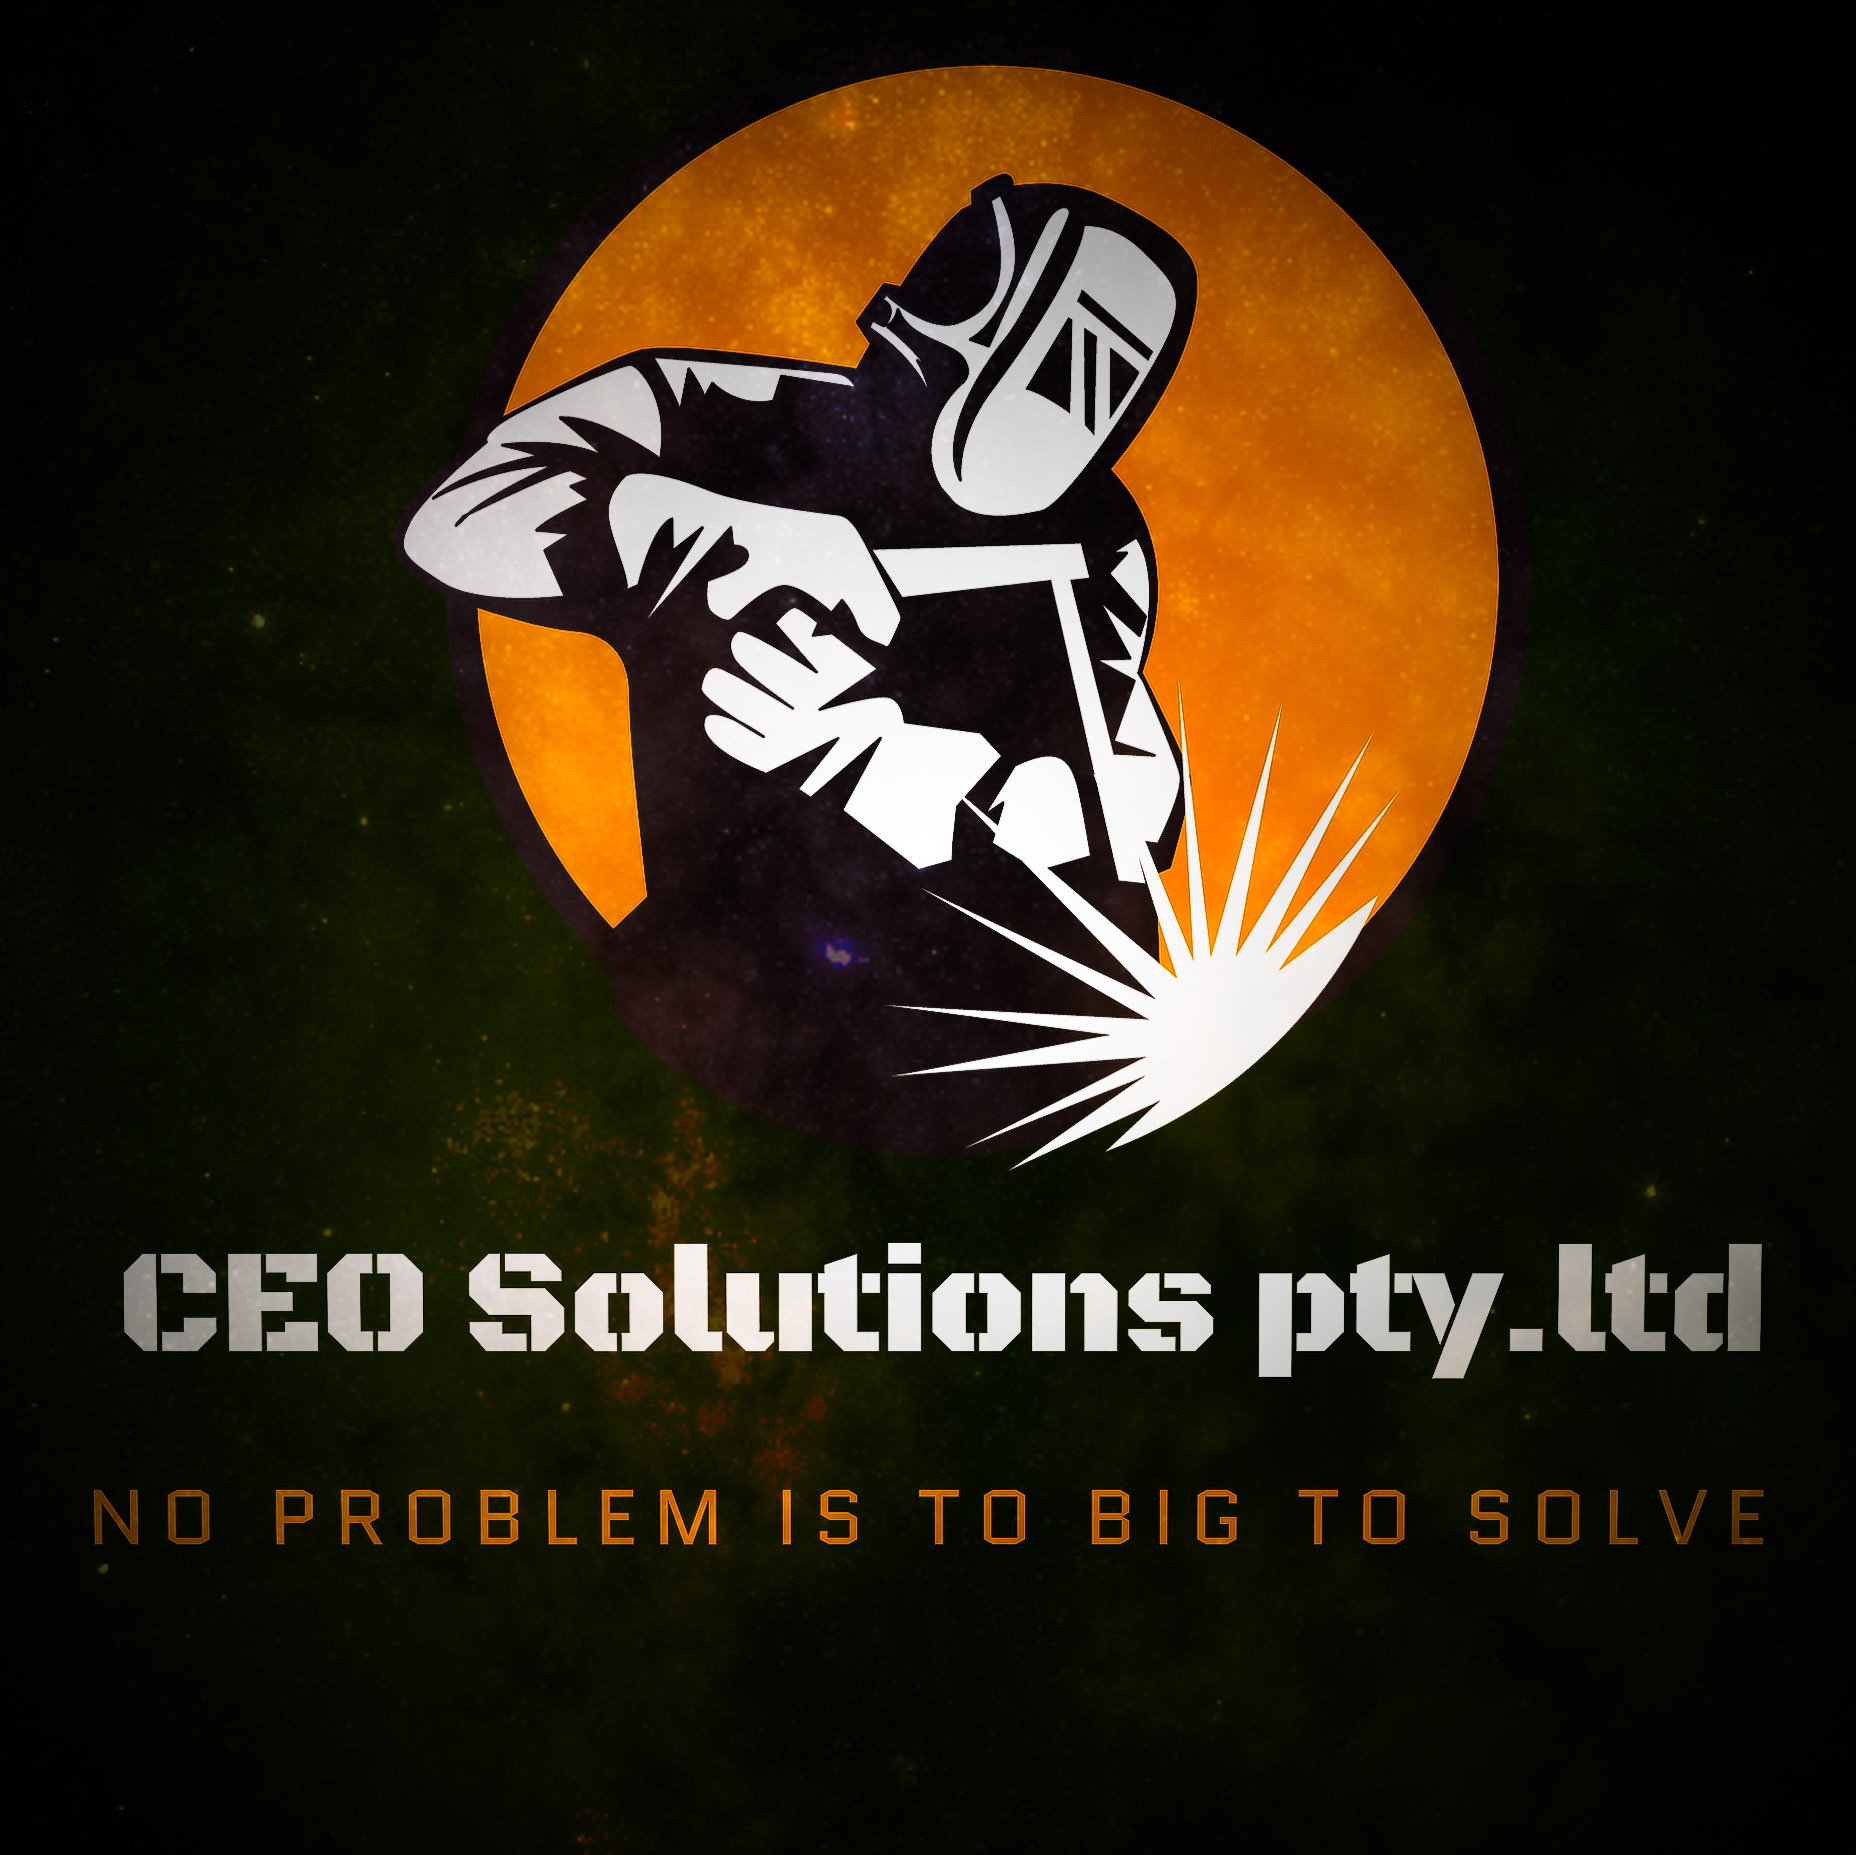 C.E.O Solutions pty.ltd